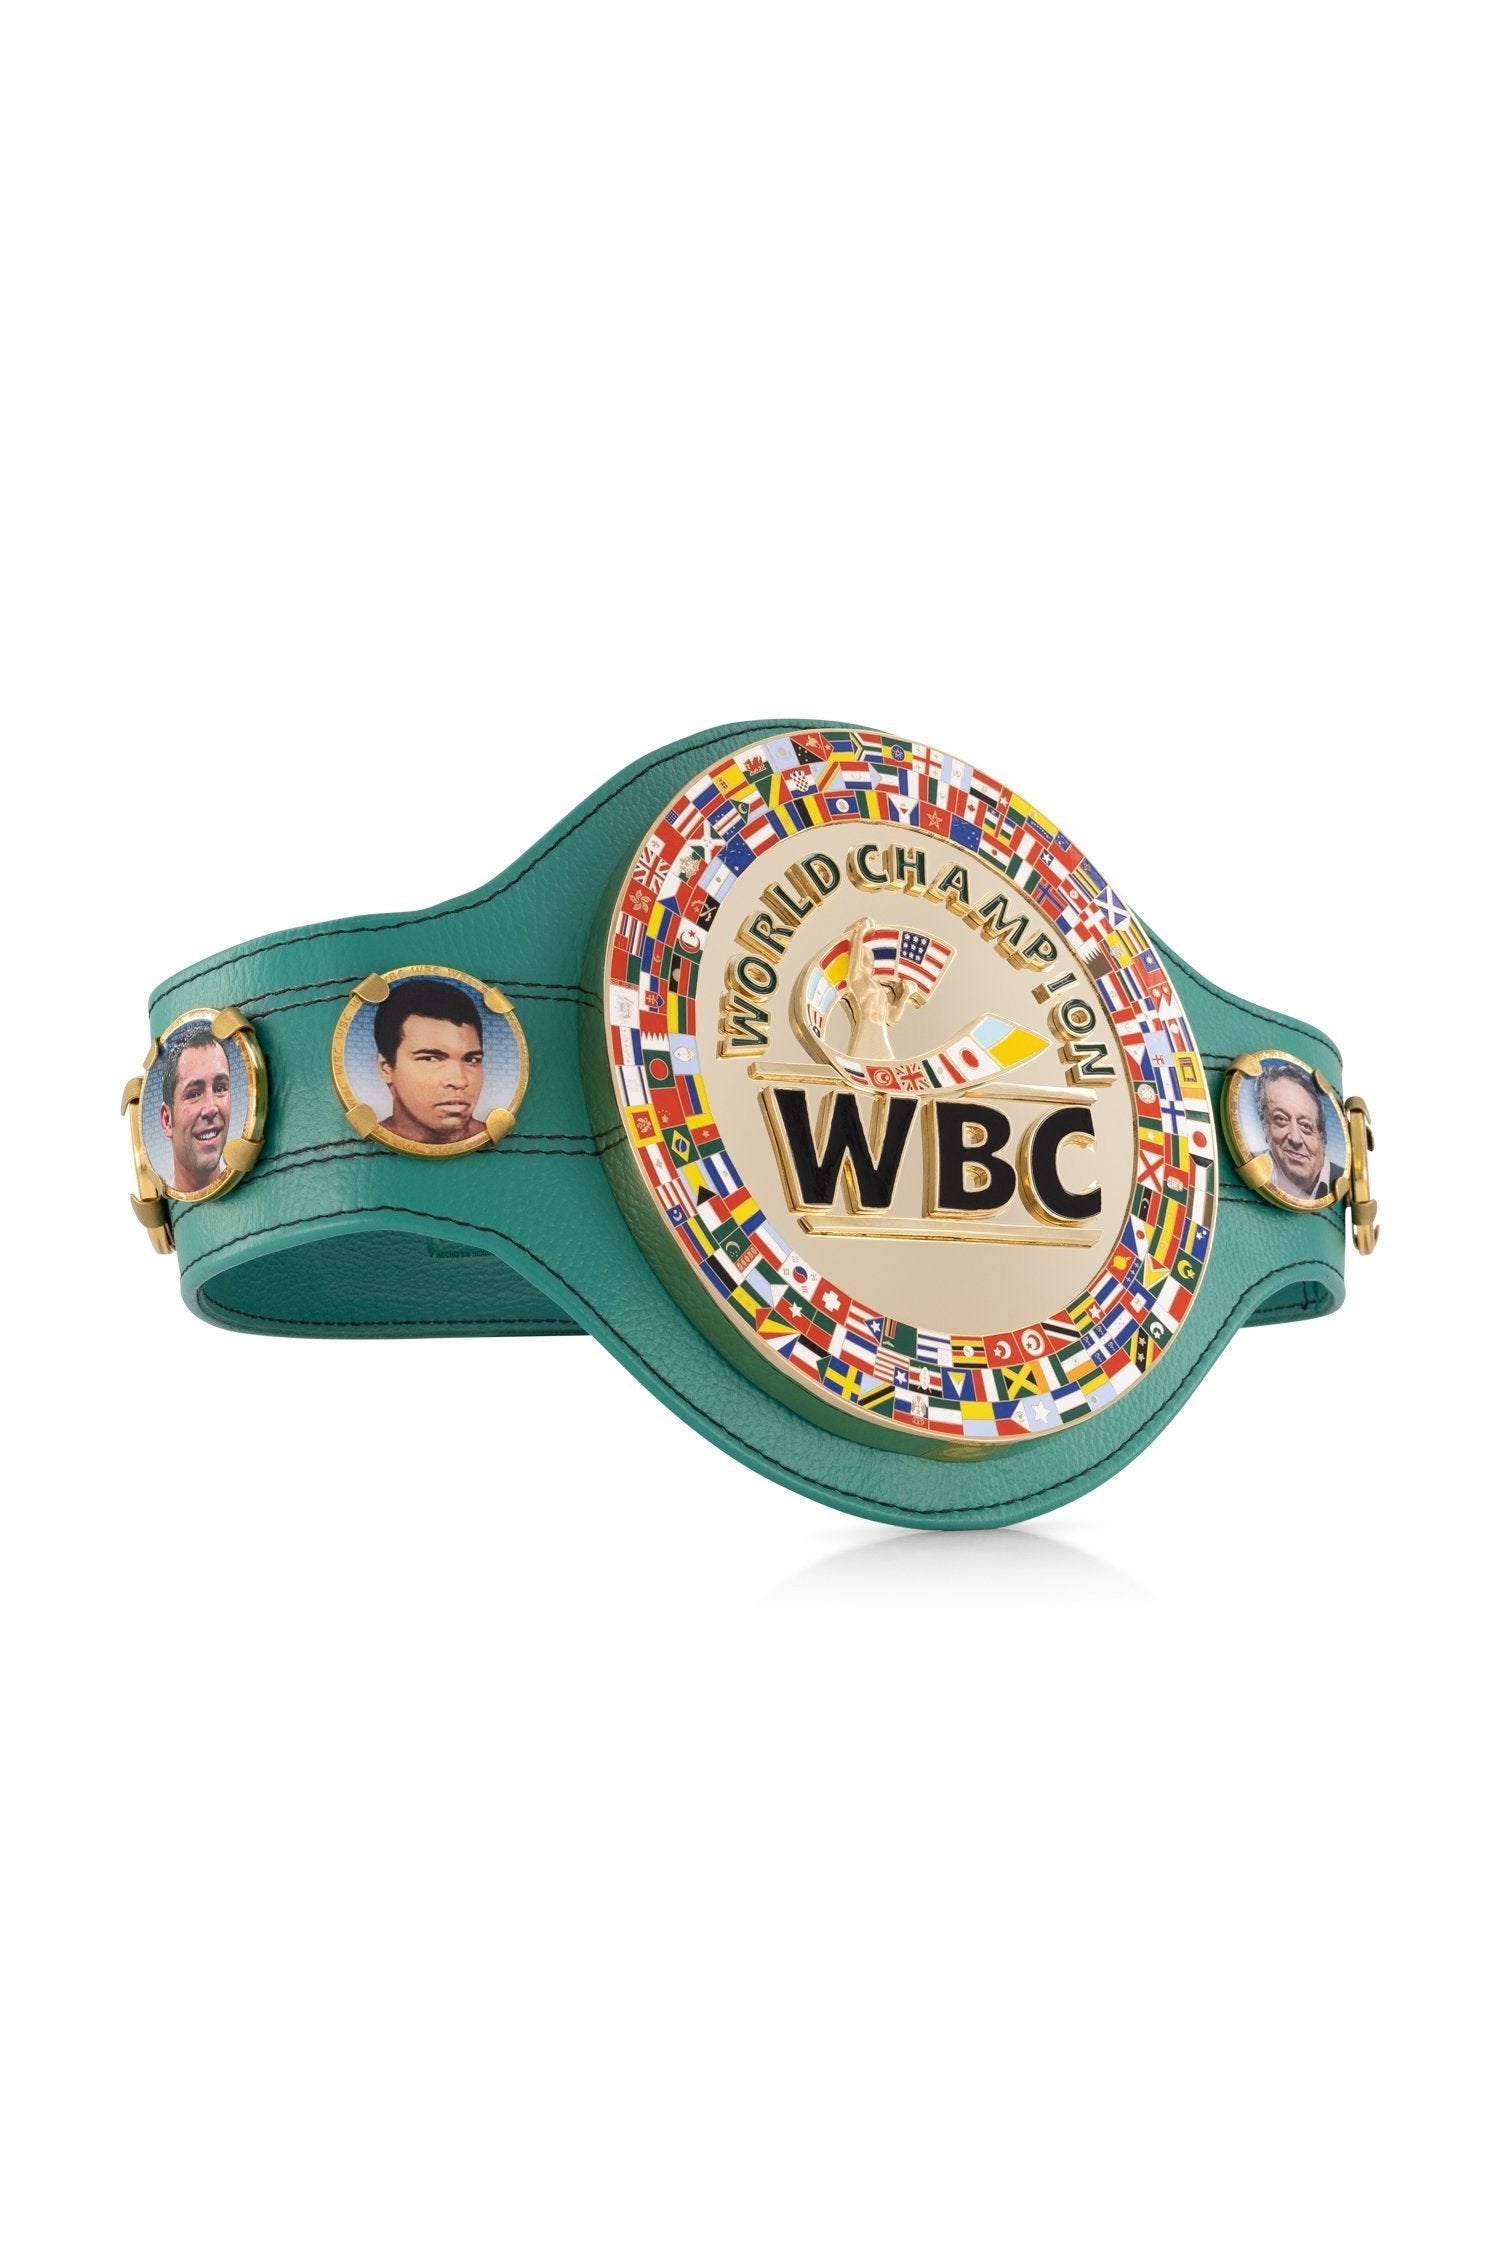 WBC Store WBC - Championship Belt  "Historic Fights" Oscar de la Hoya vs. Floyd Mayweather